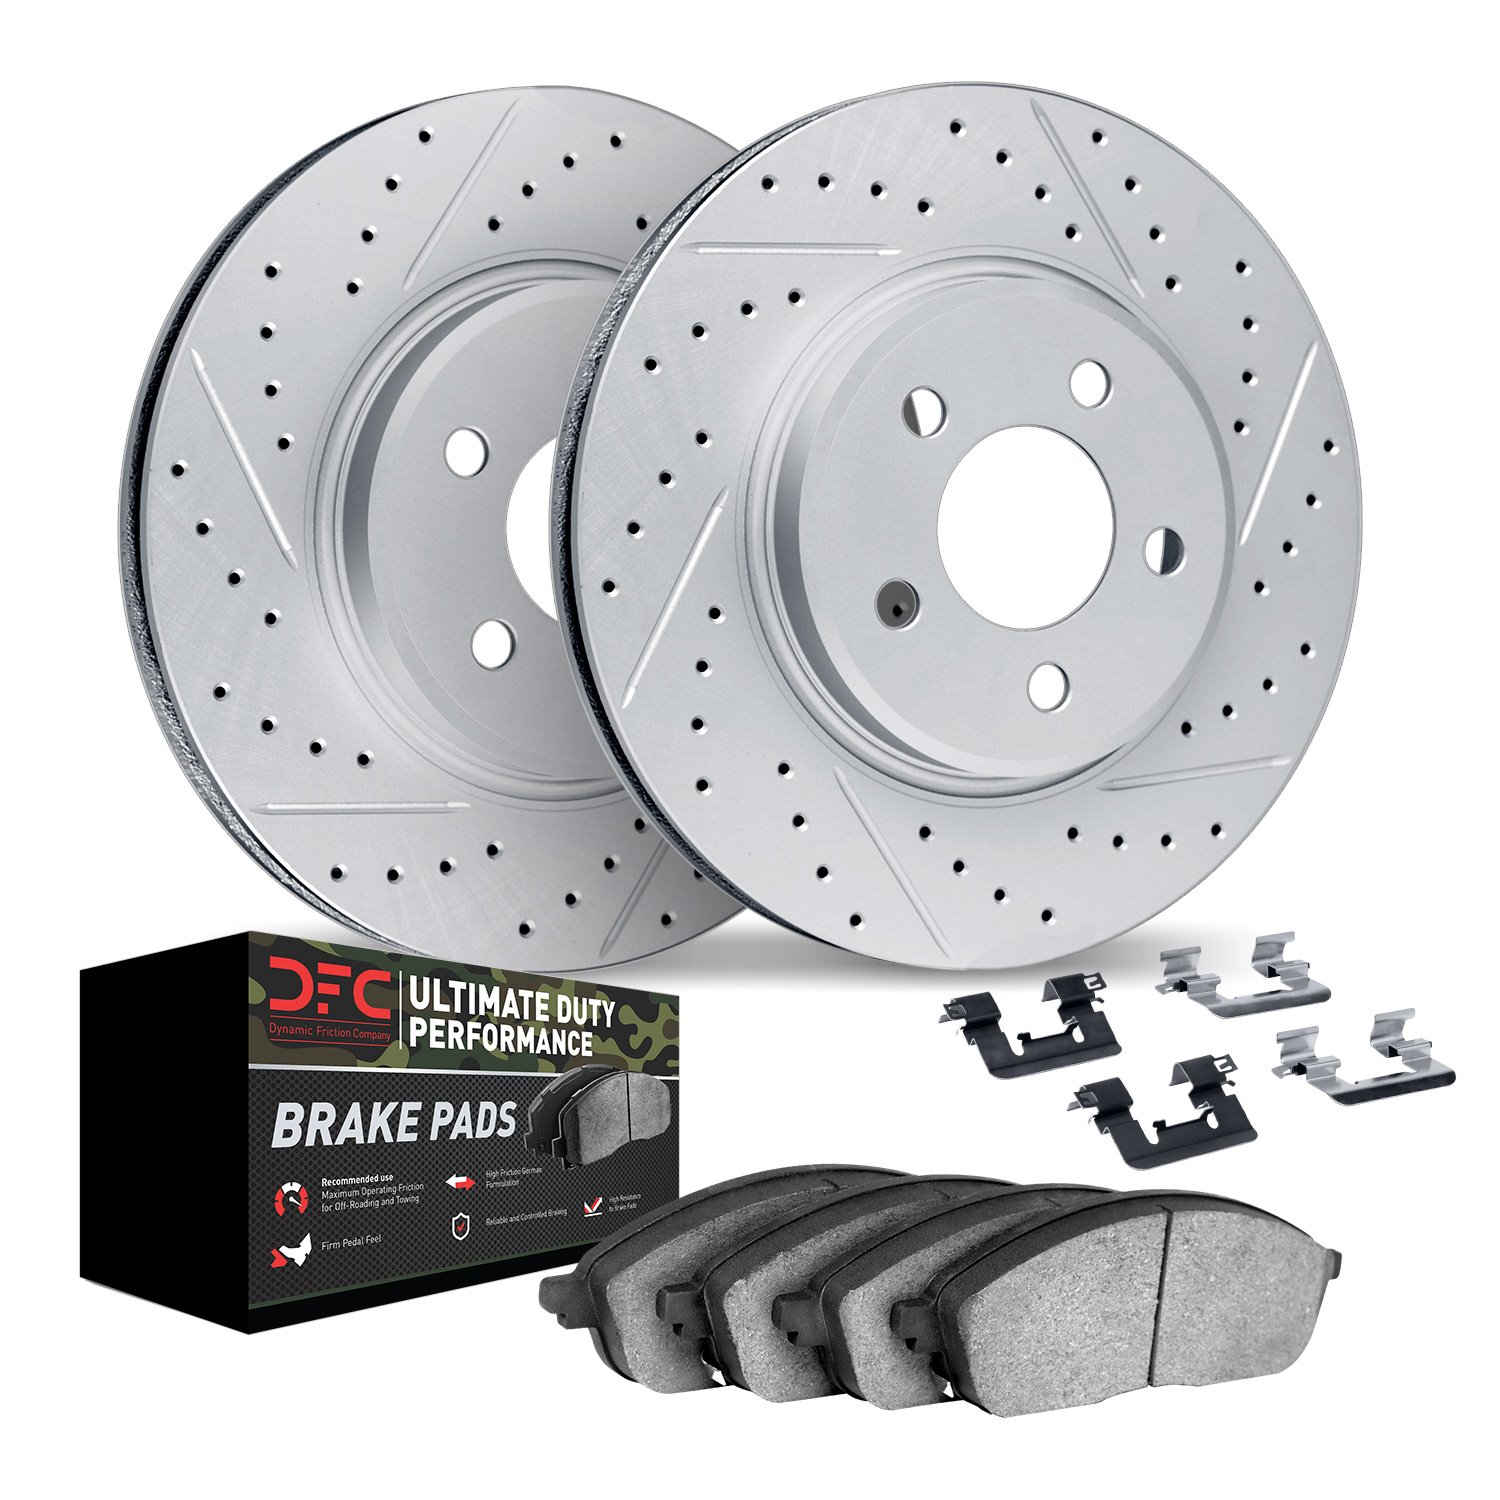 2412-42032 Geoperformance Drilled/Slotted Brake Rotors with Ultimate-Duty Brake Pads Kit & Hardware, Fits Select Mopar, Position